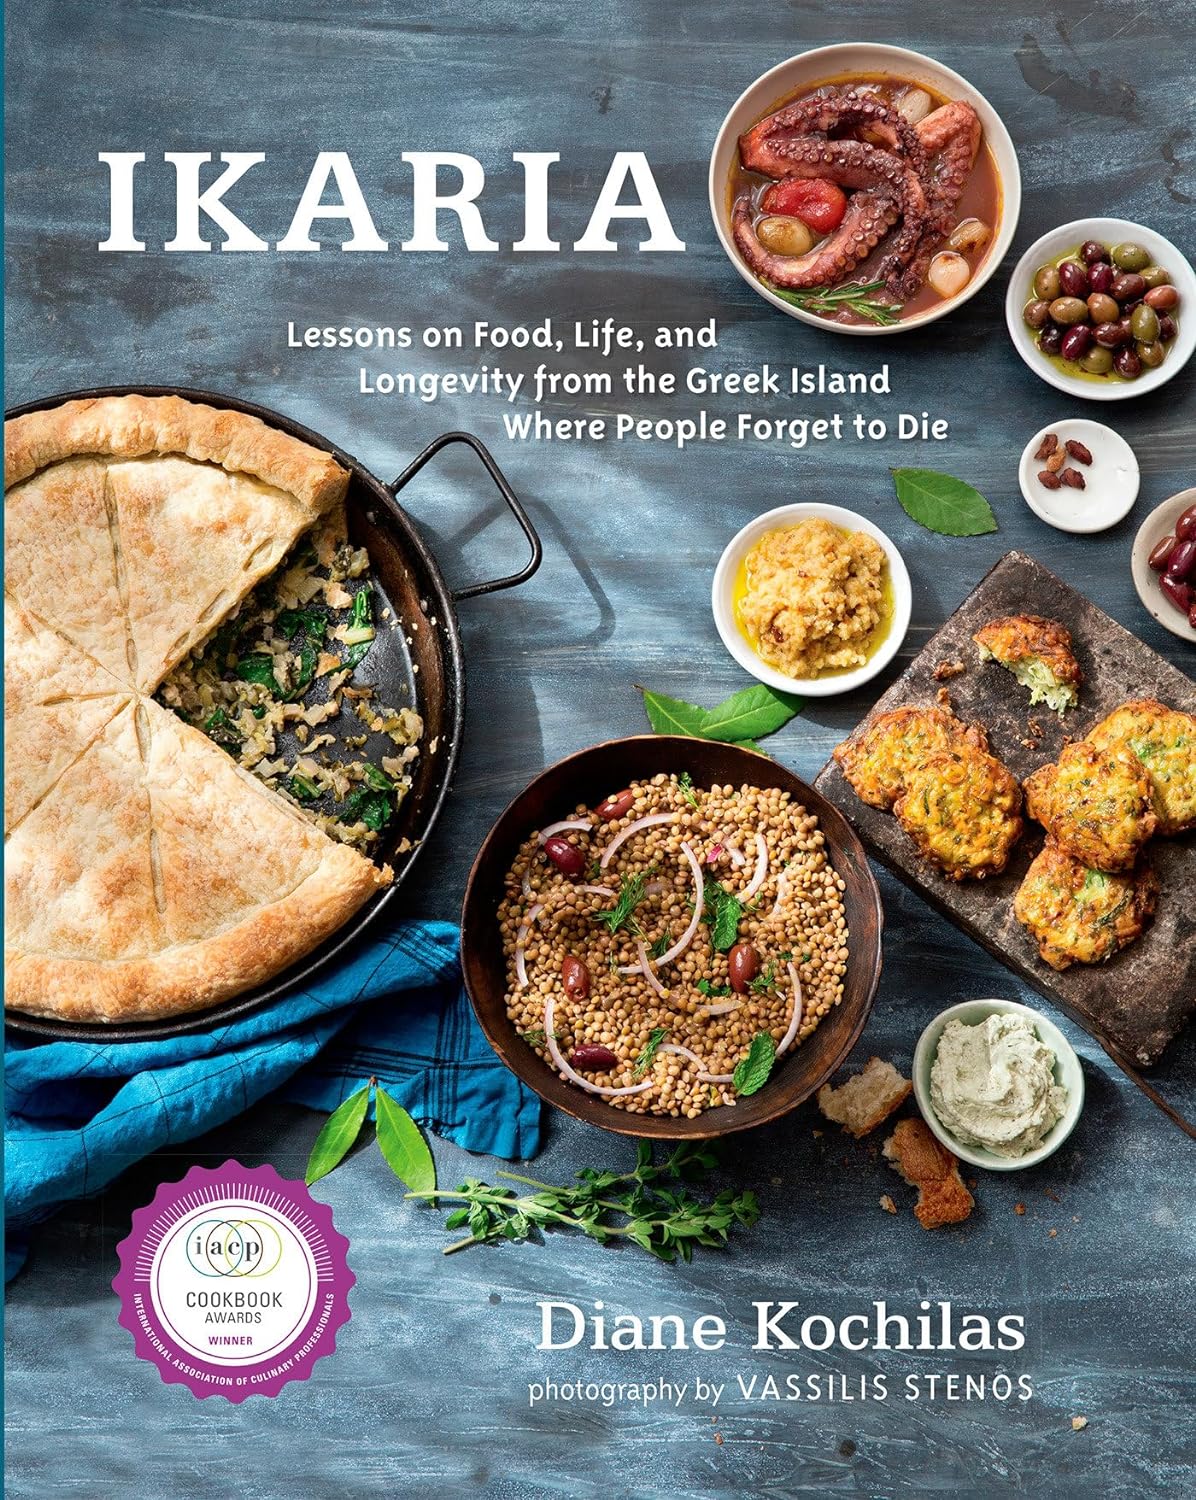 Book: Ikaria: A Mediterranean Diet Cookbook